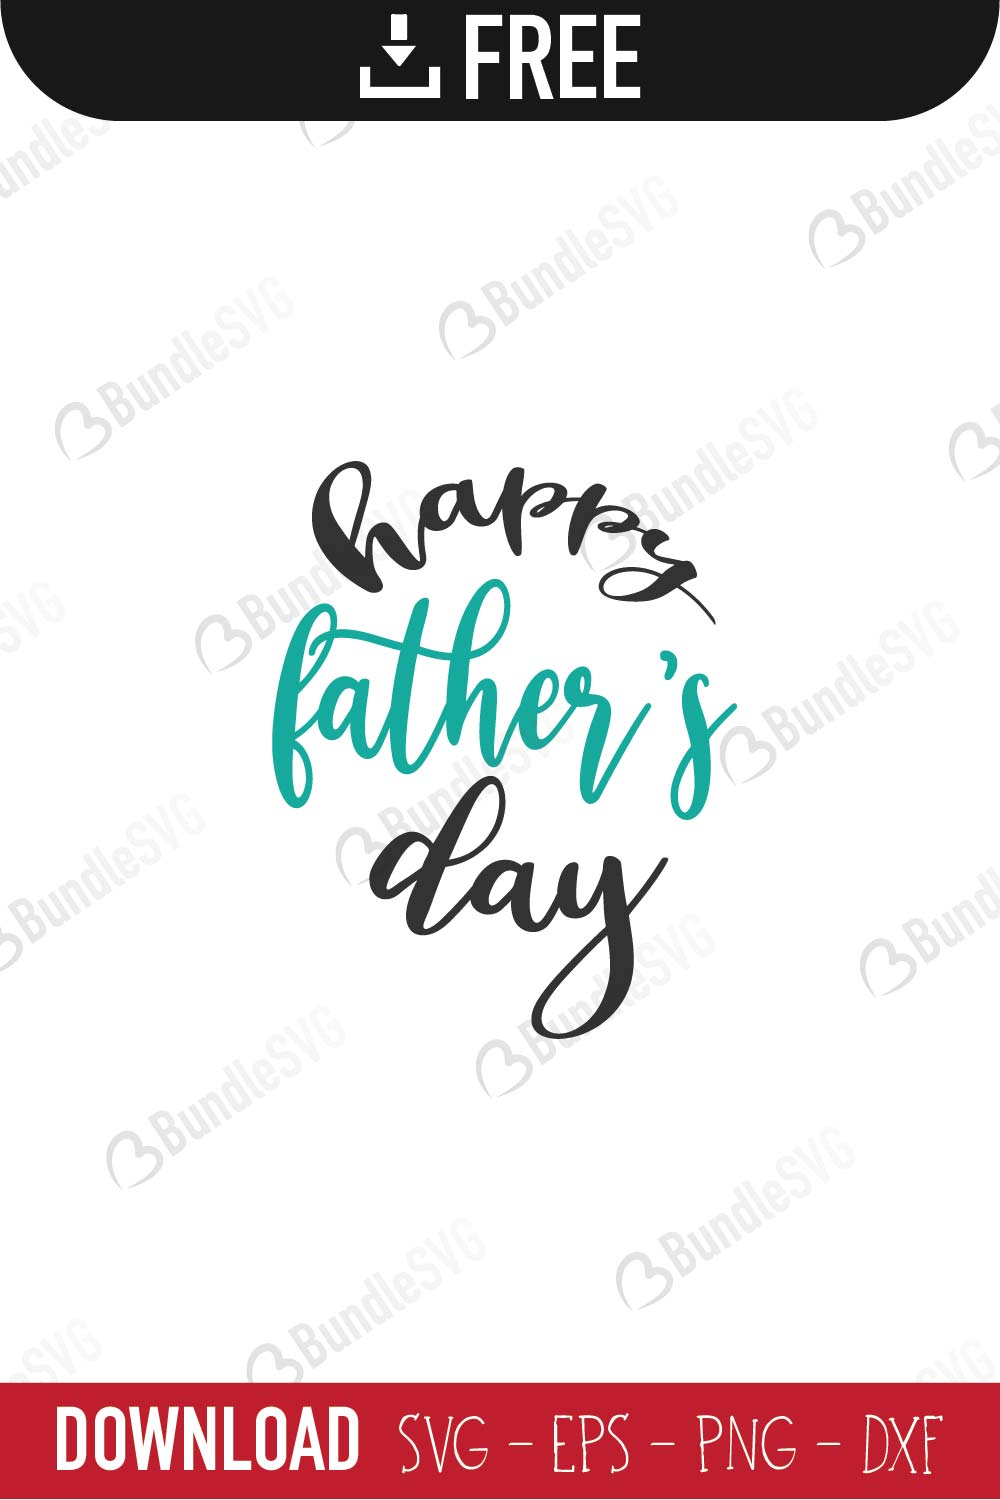 Happy Father's Day SVG Cut Files Free Download | BundleSVG